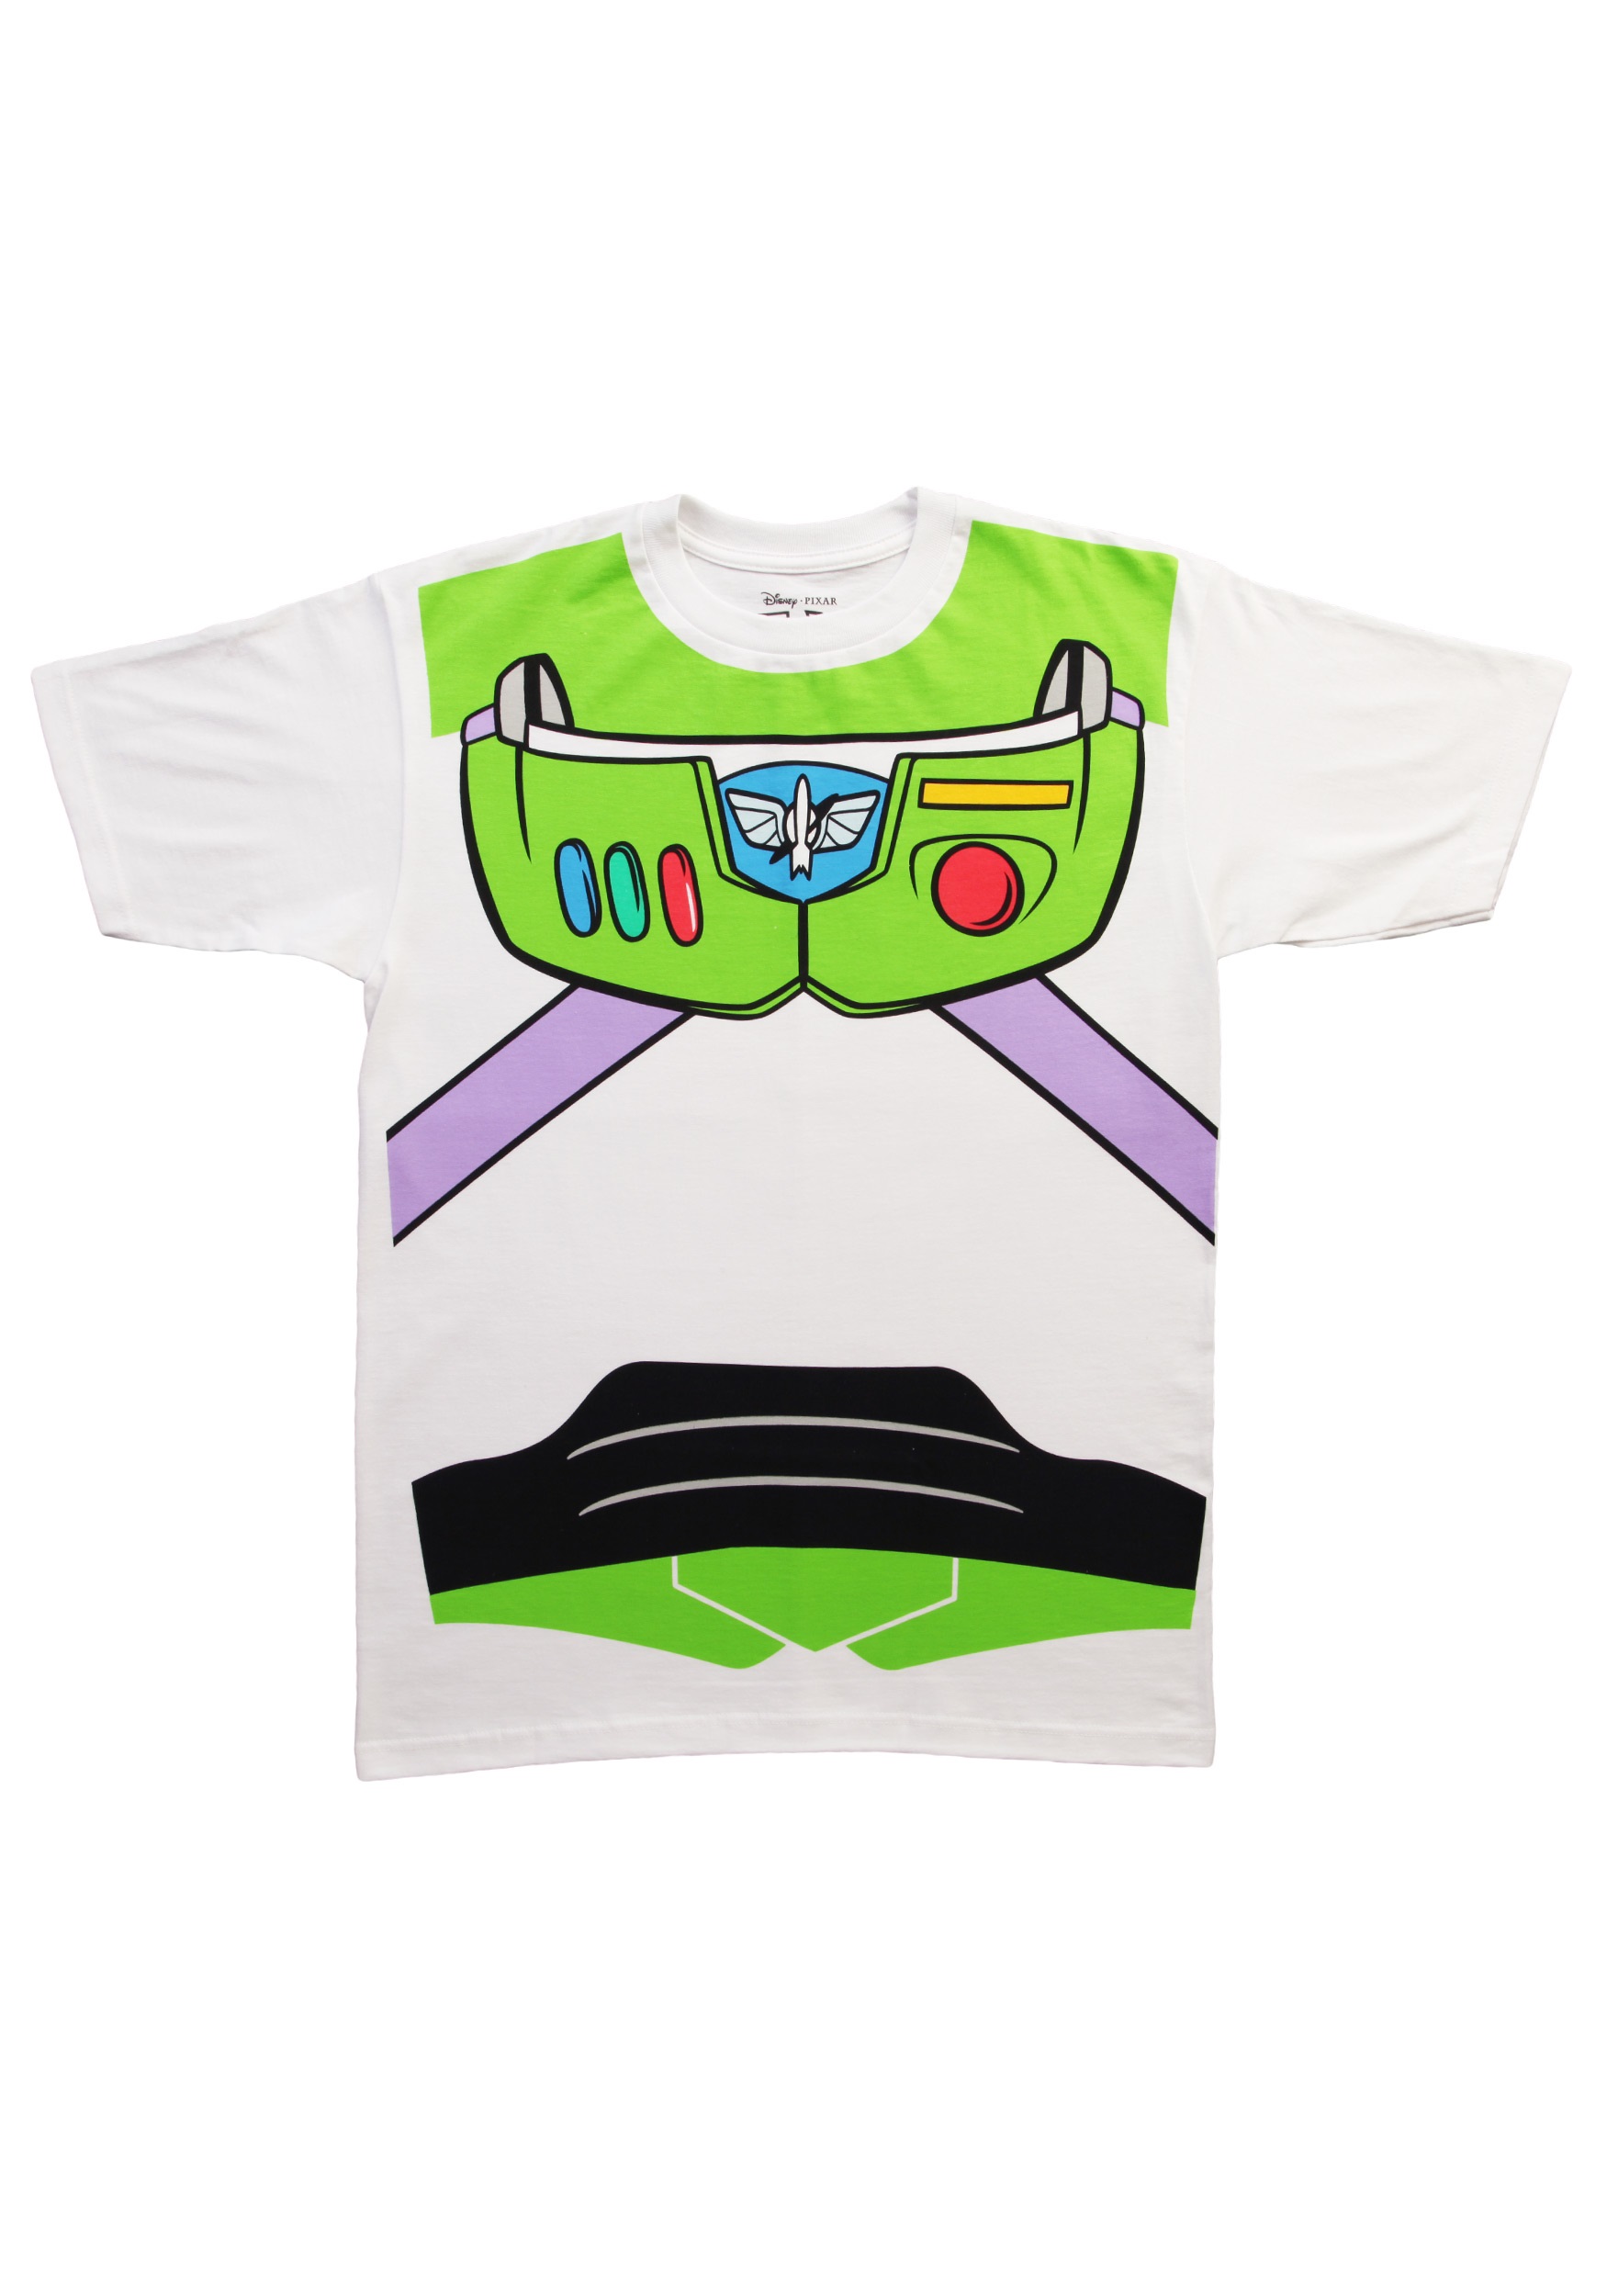 Buzz Lightyear Costume T-Shirt for Men